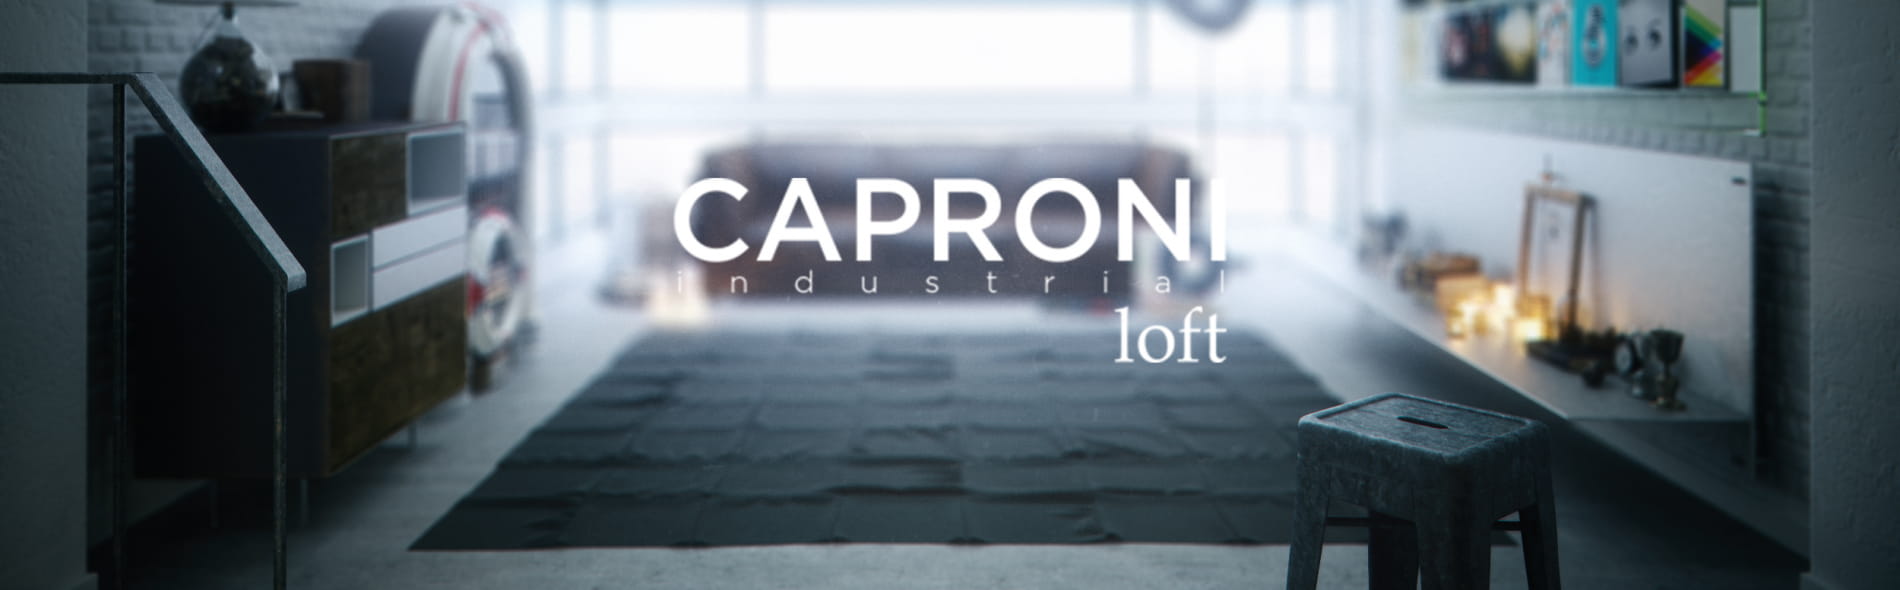 caproni-industrial-loft